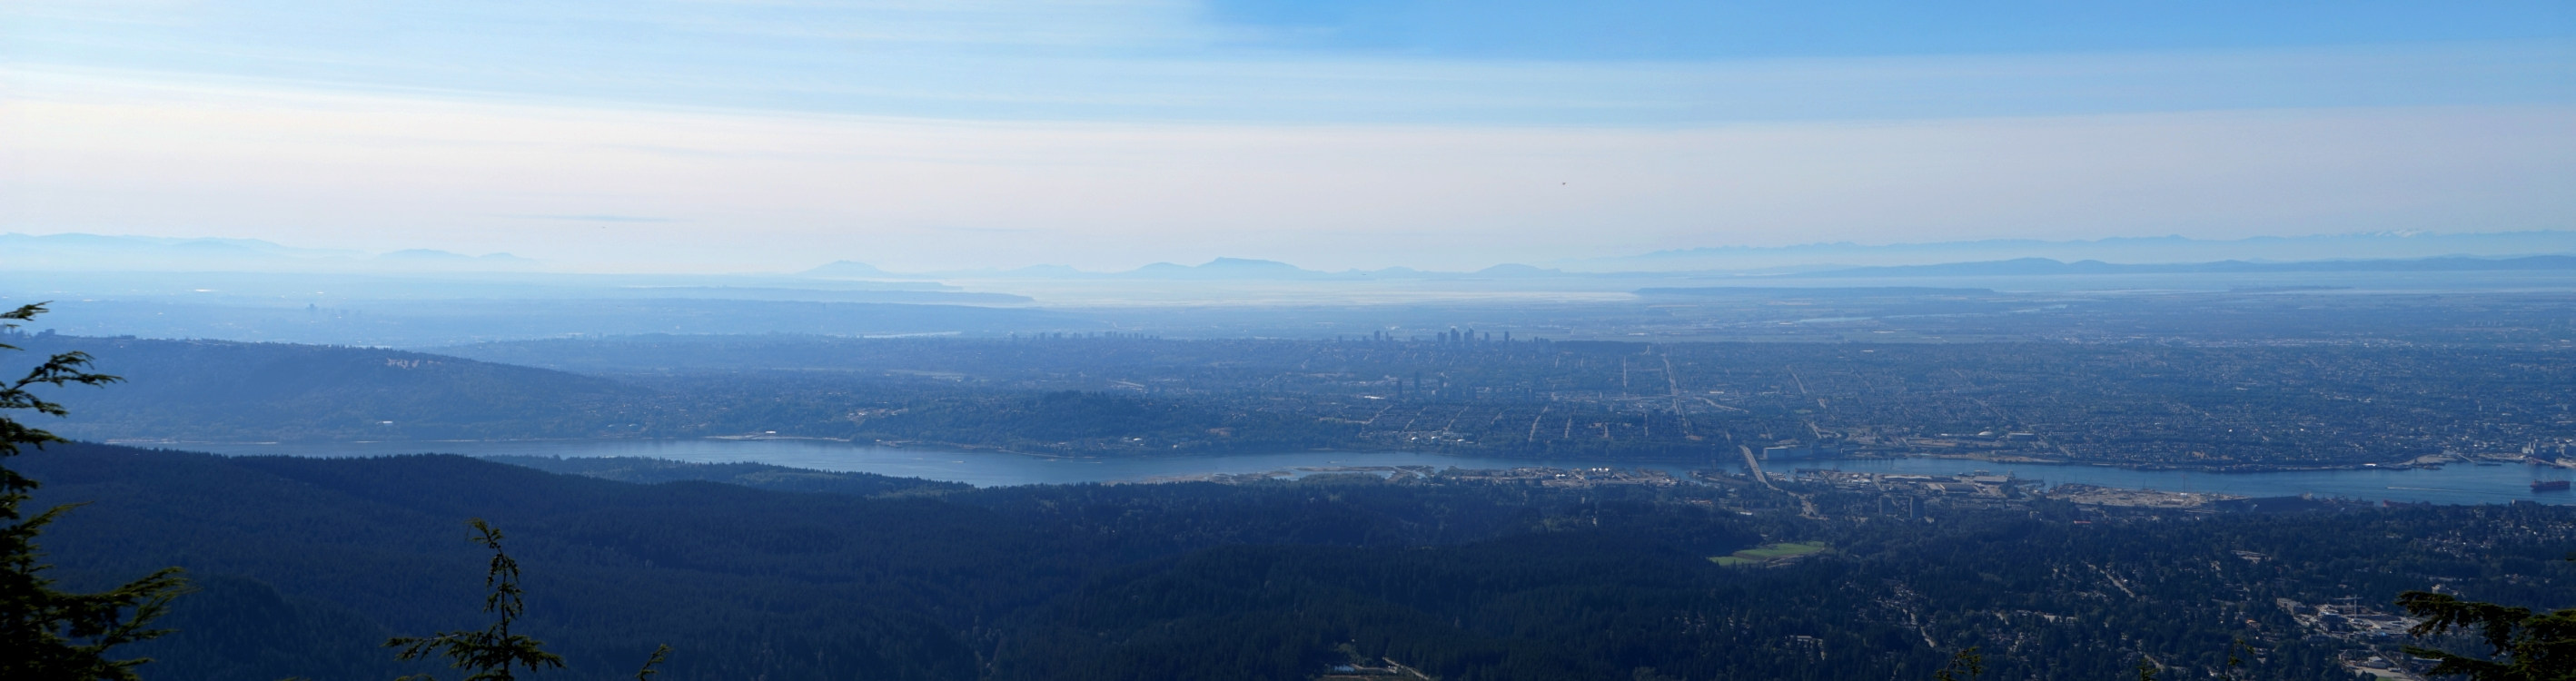 Blick vom Gipfel des Lynn Peak auf Vancouver.